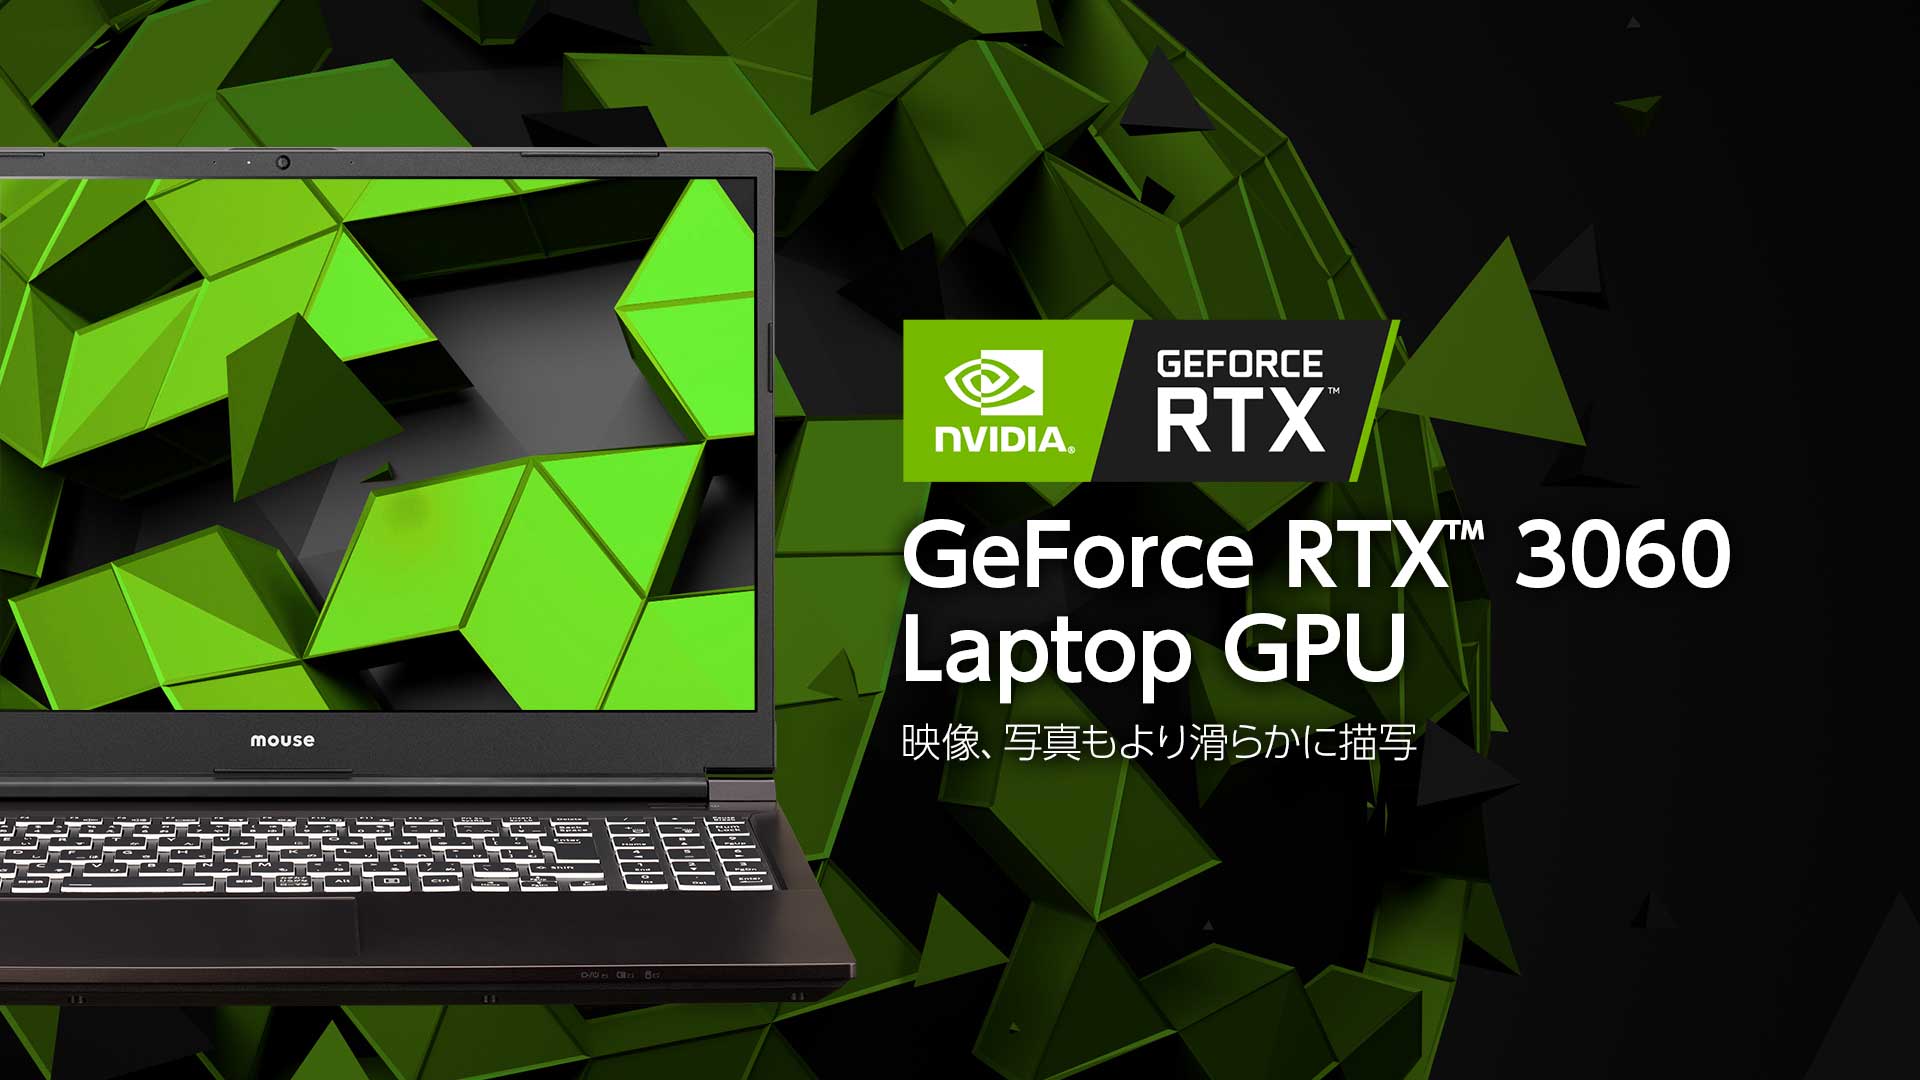 NVIDIA GeForce RTX 3060 Laptop GPU